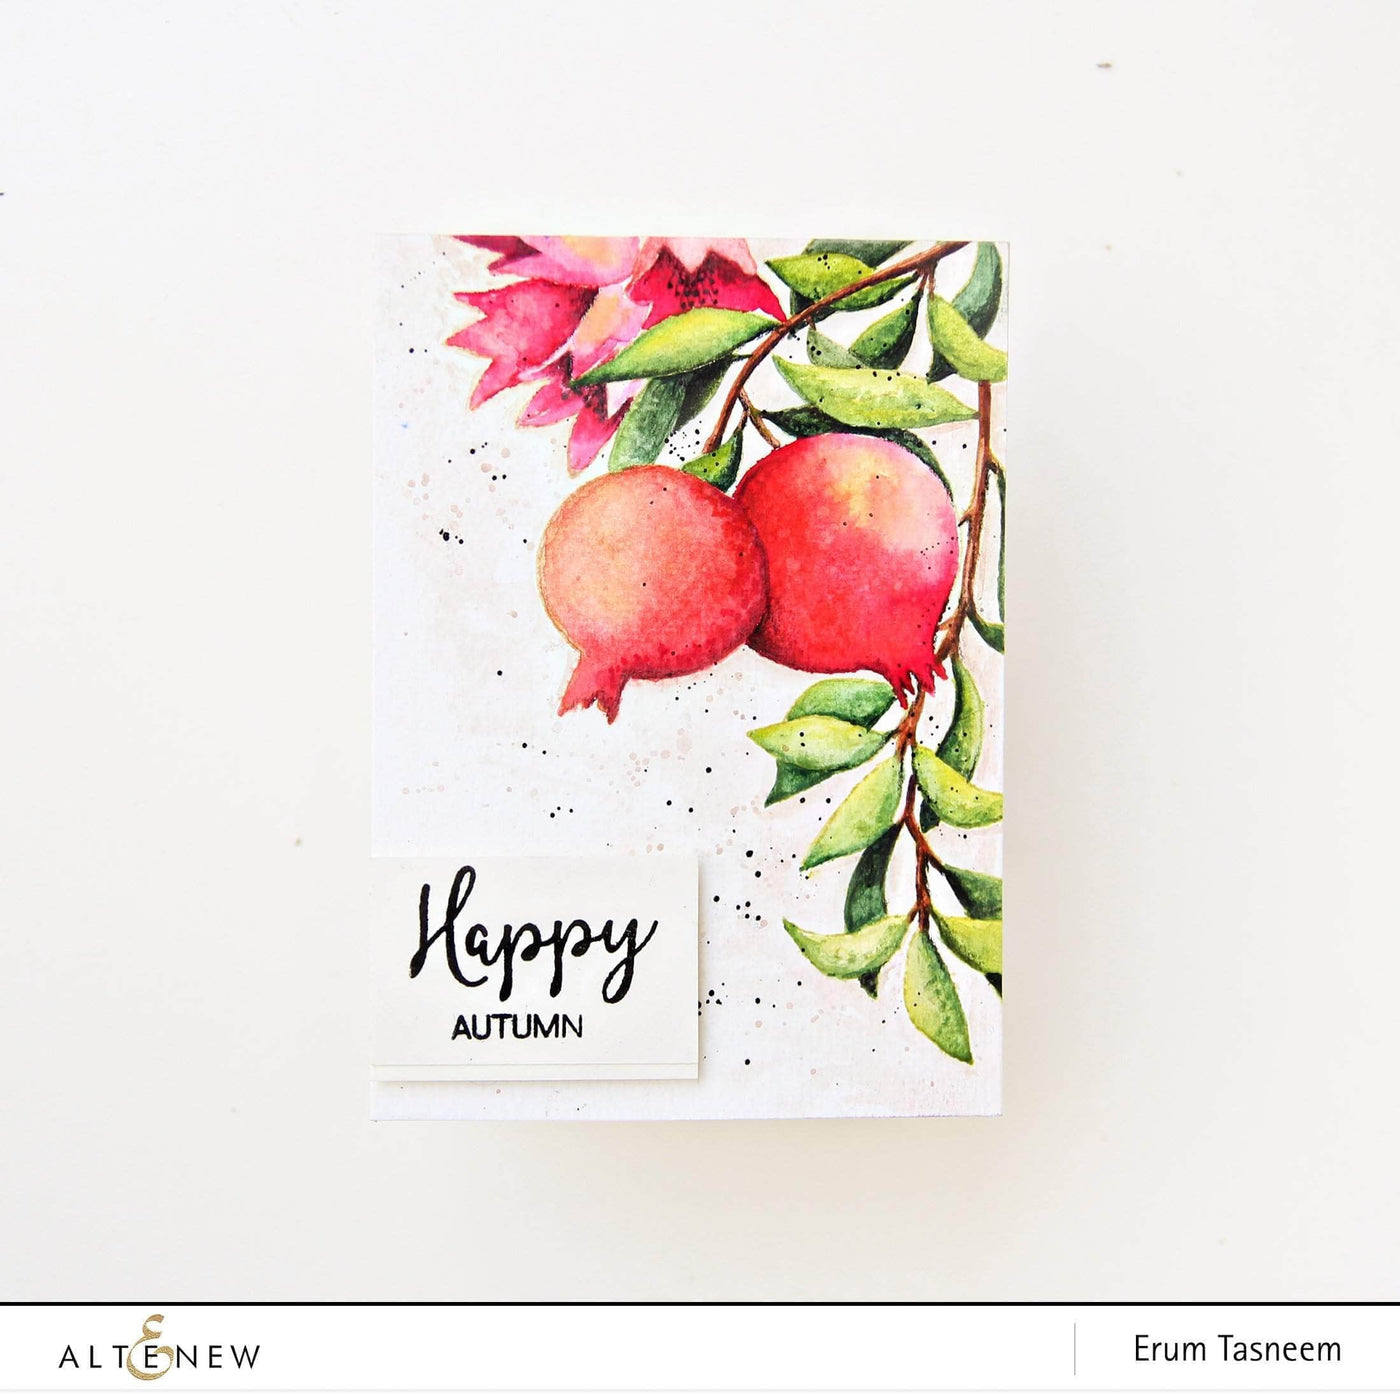 Altenew Creativity Kit Bundle Botanical Pomegranate Creativity Cardmaking Kit